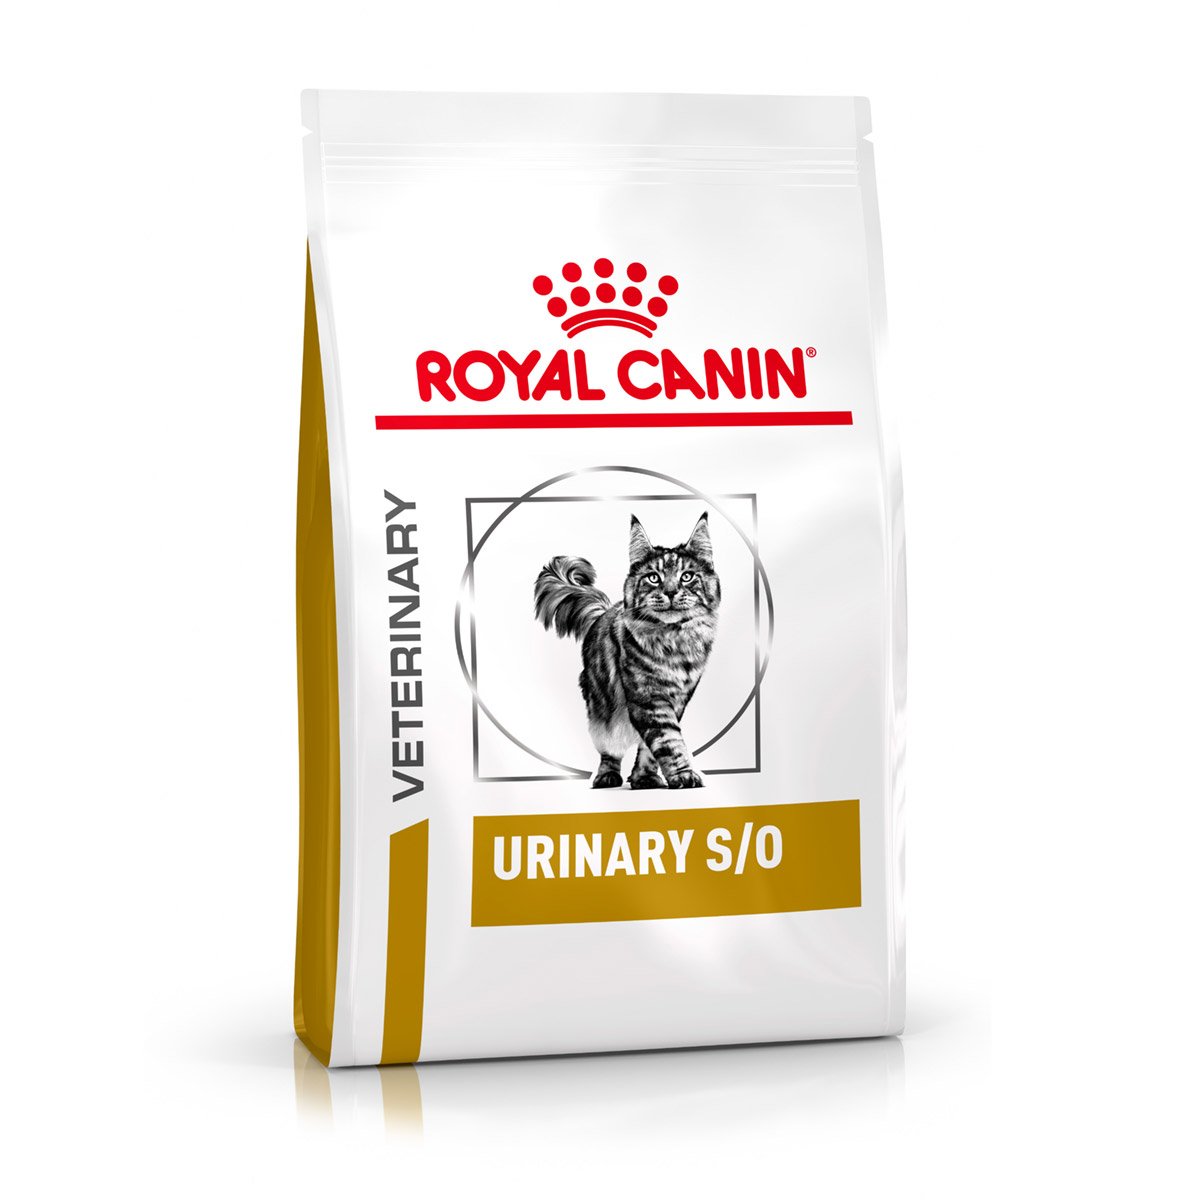 ROYAL CANIN® Veterinary URINARY S/O Trockenfutter für Katzen 7kg von Royal Canin